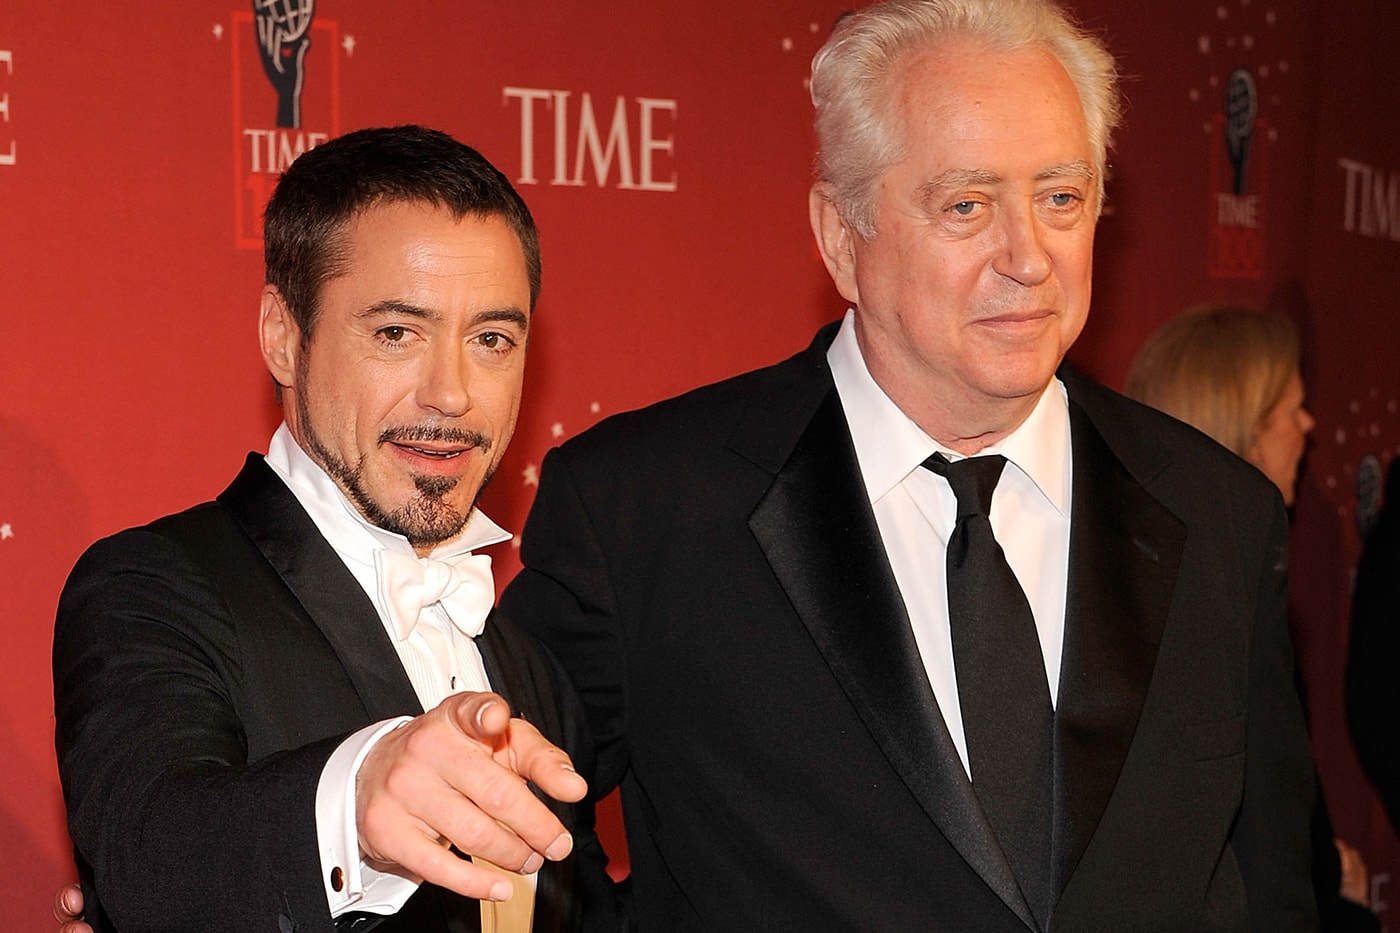 Robert Downey Jr. Tribute to Robert Downey Sr. Father Hollywood New Work marvel iron man tony stark actors directors 